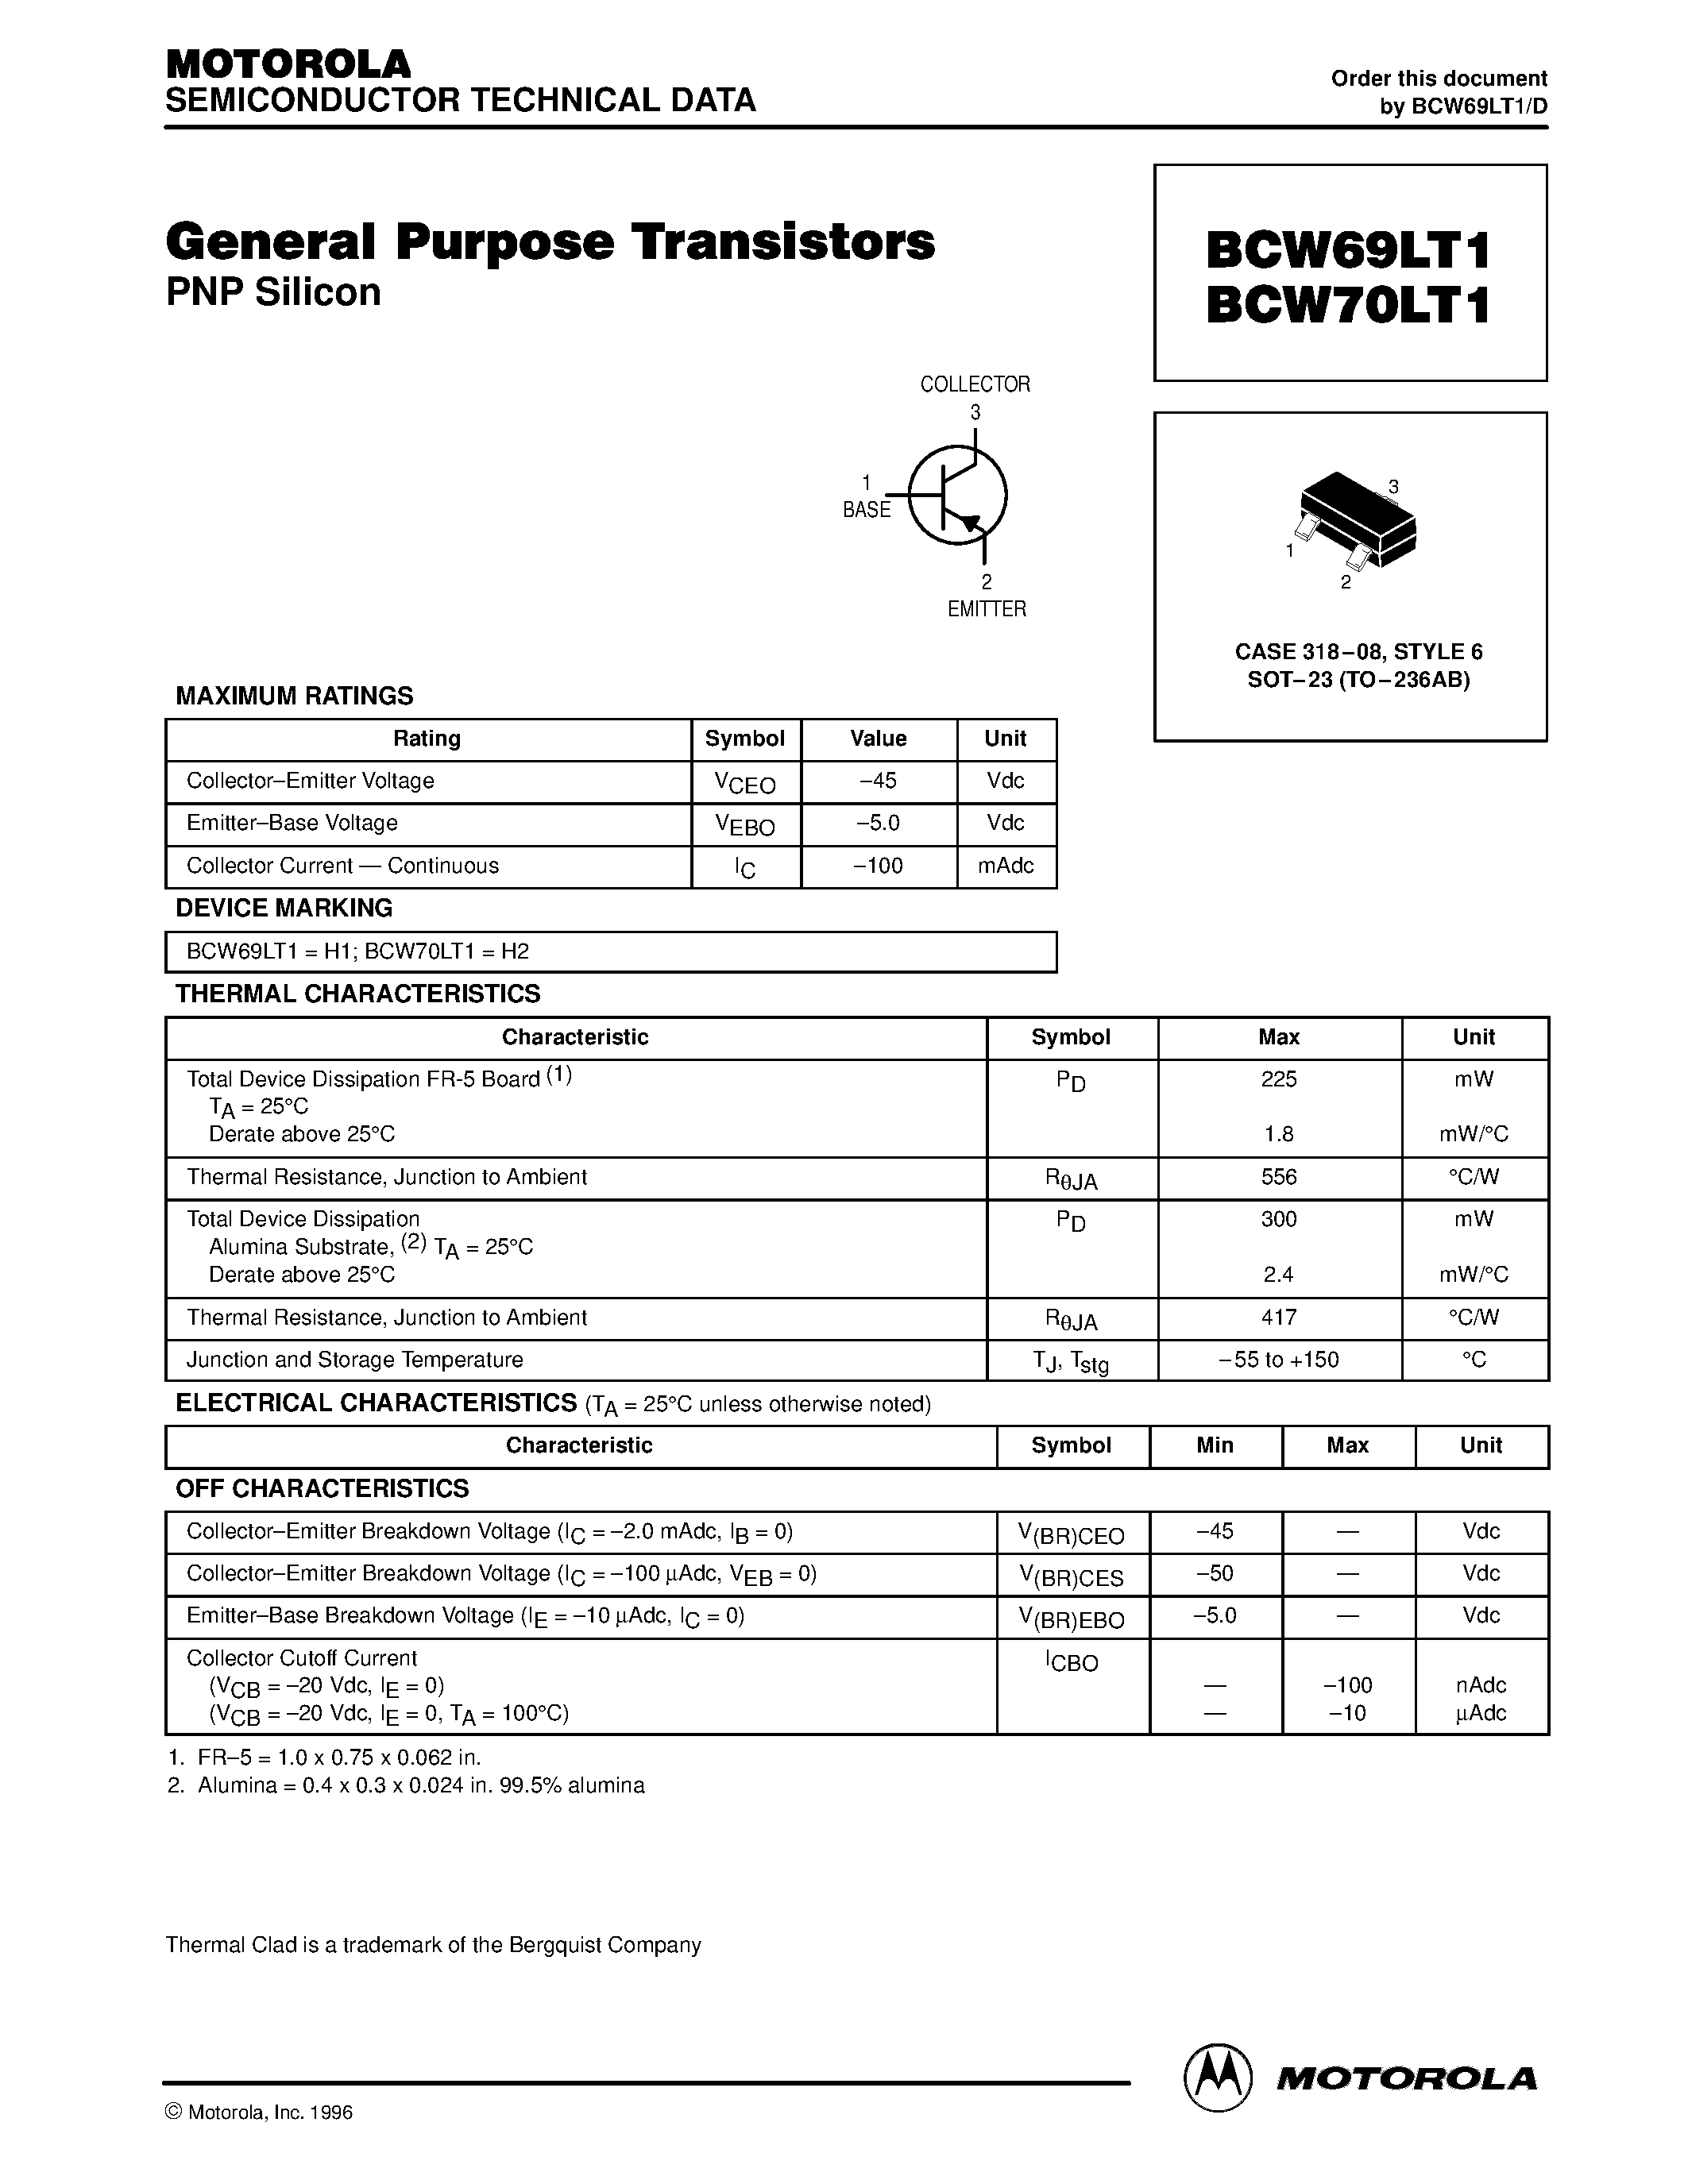 Datasheet BCW70LT1 - General Purpose Transistors page 1